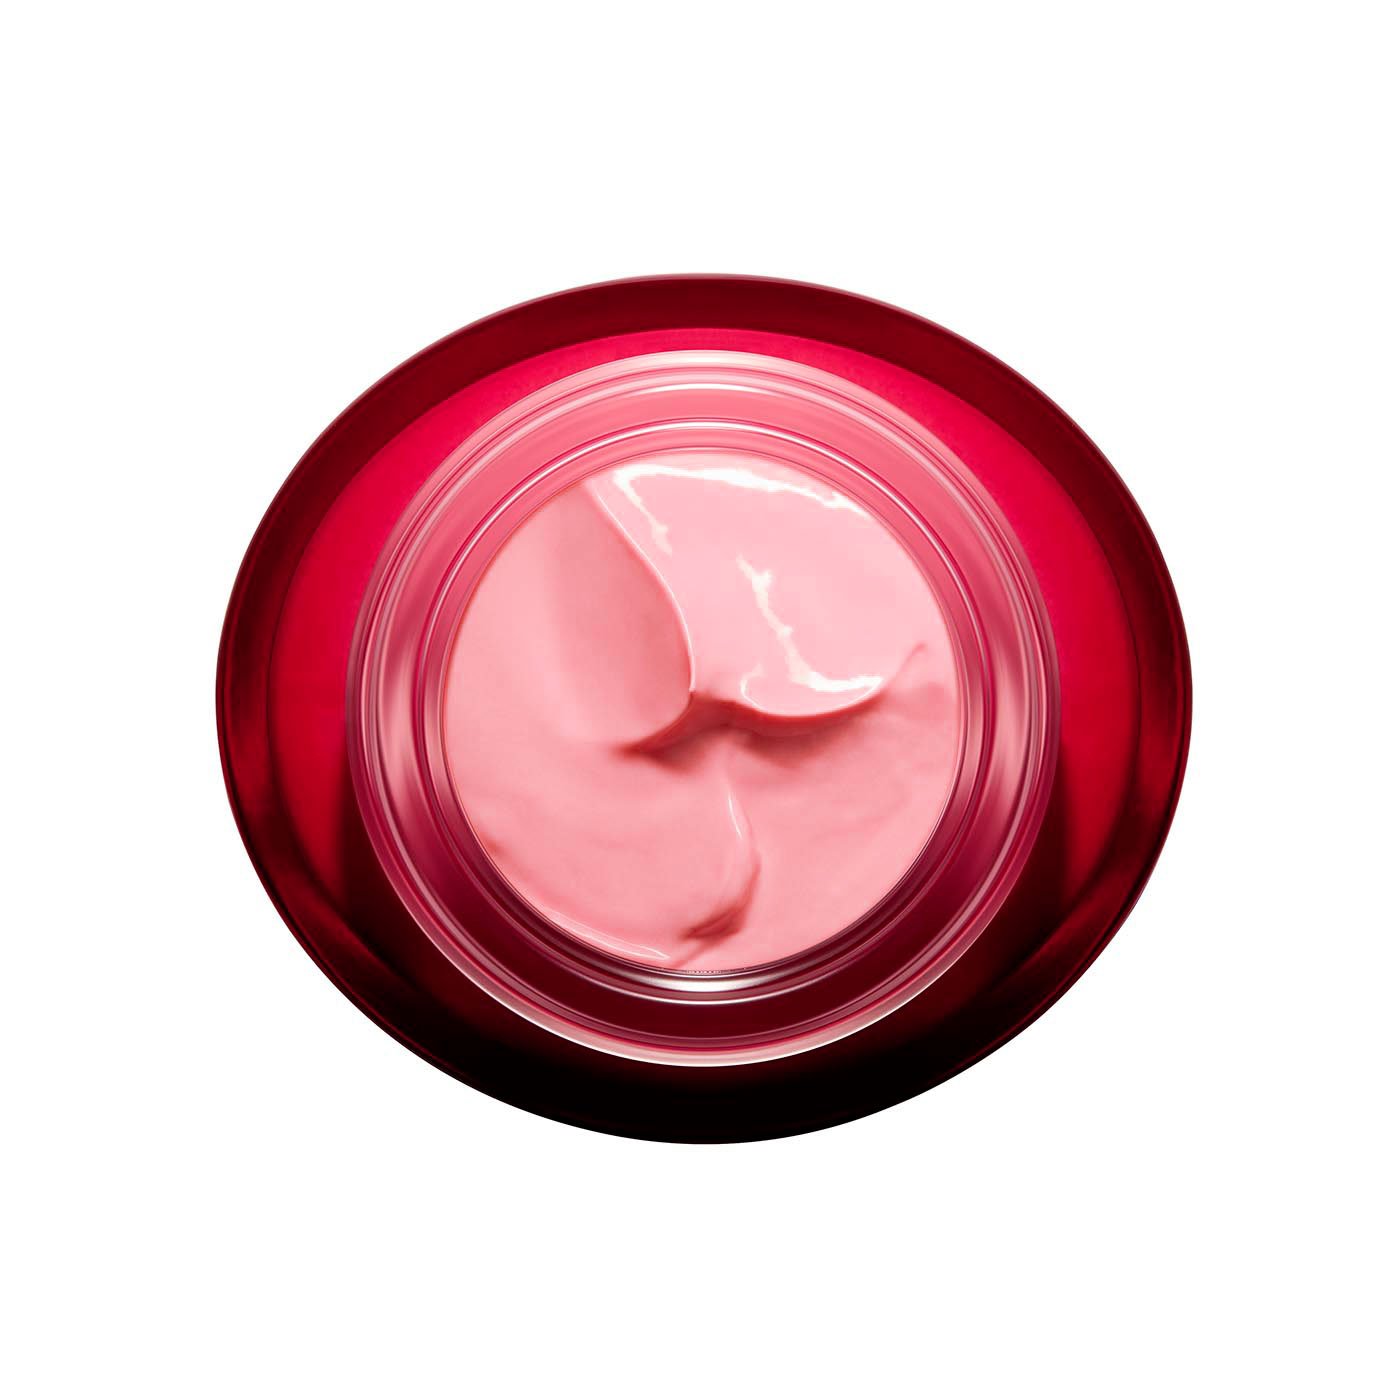 Clarins Multi-Intensiva Rose Lumière Día  para todo tipo de pieles